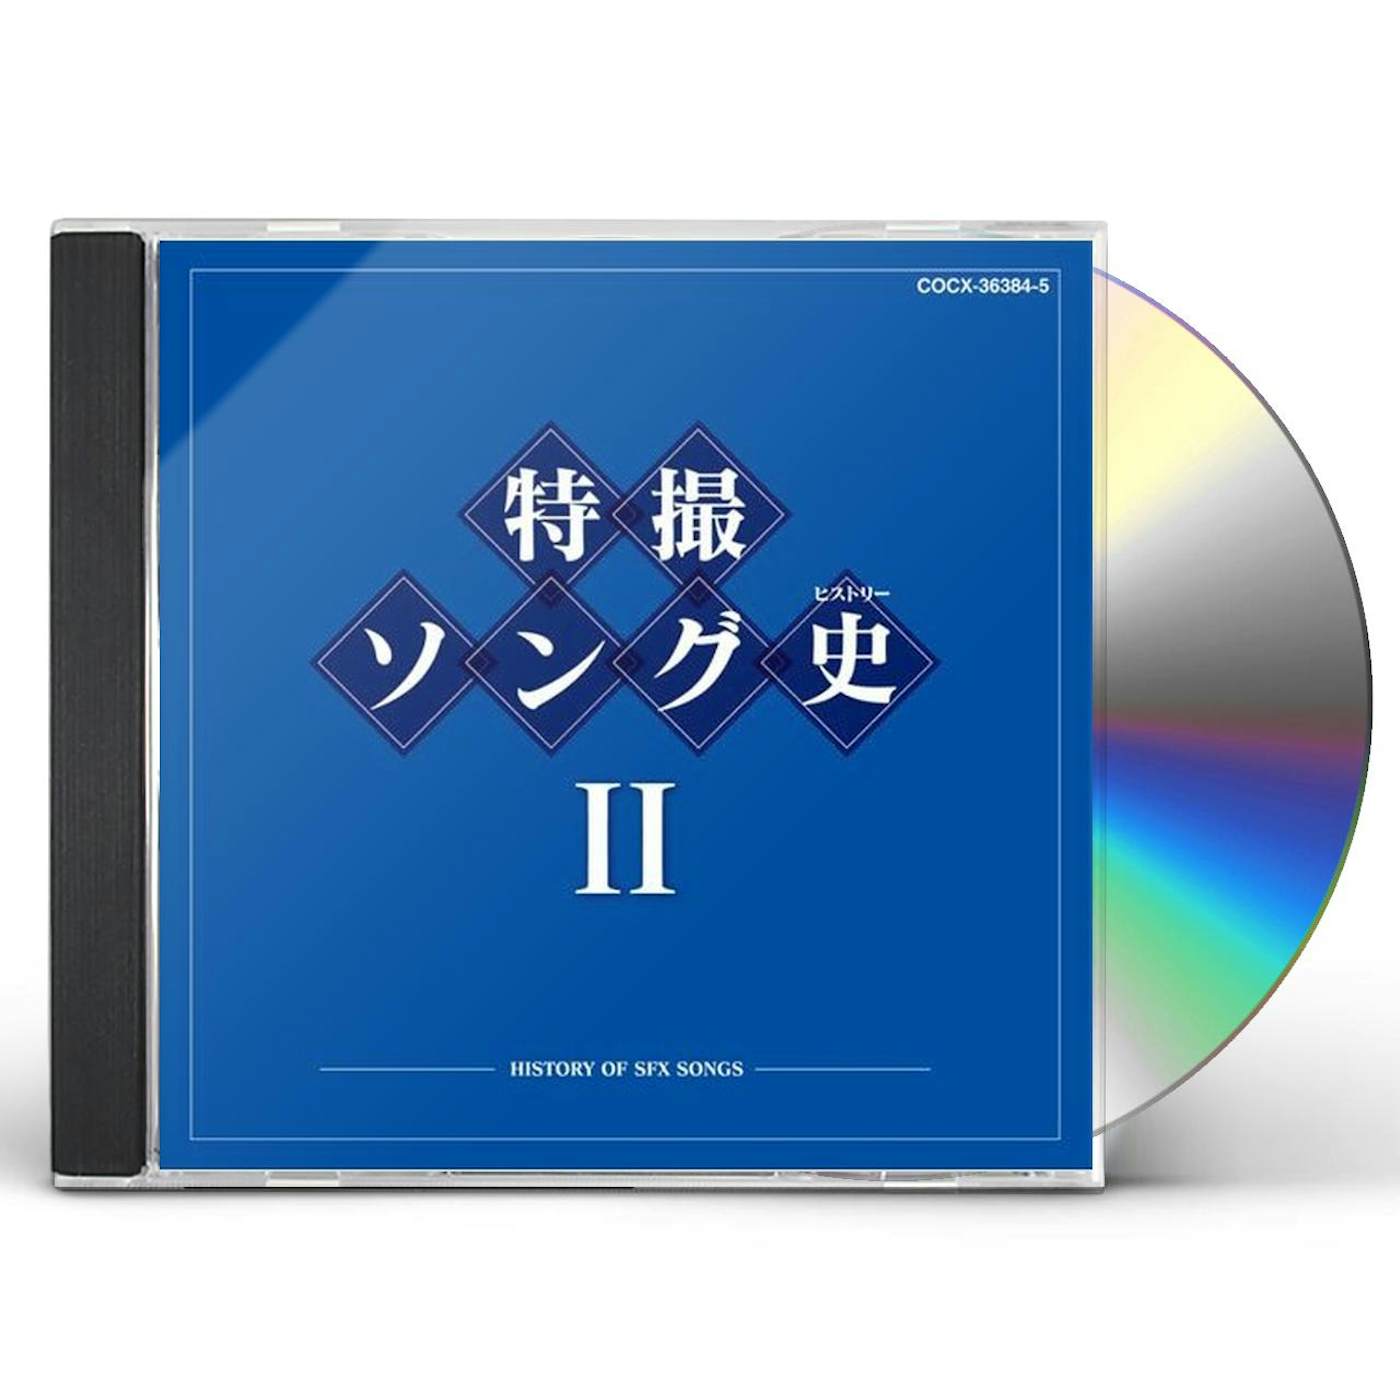 Kids TOKUSATSU BEST HISTORY 2 CD